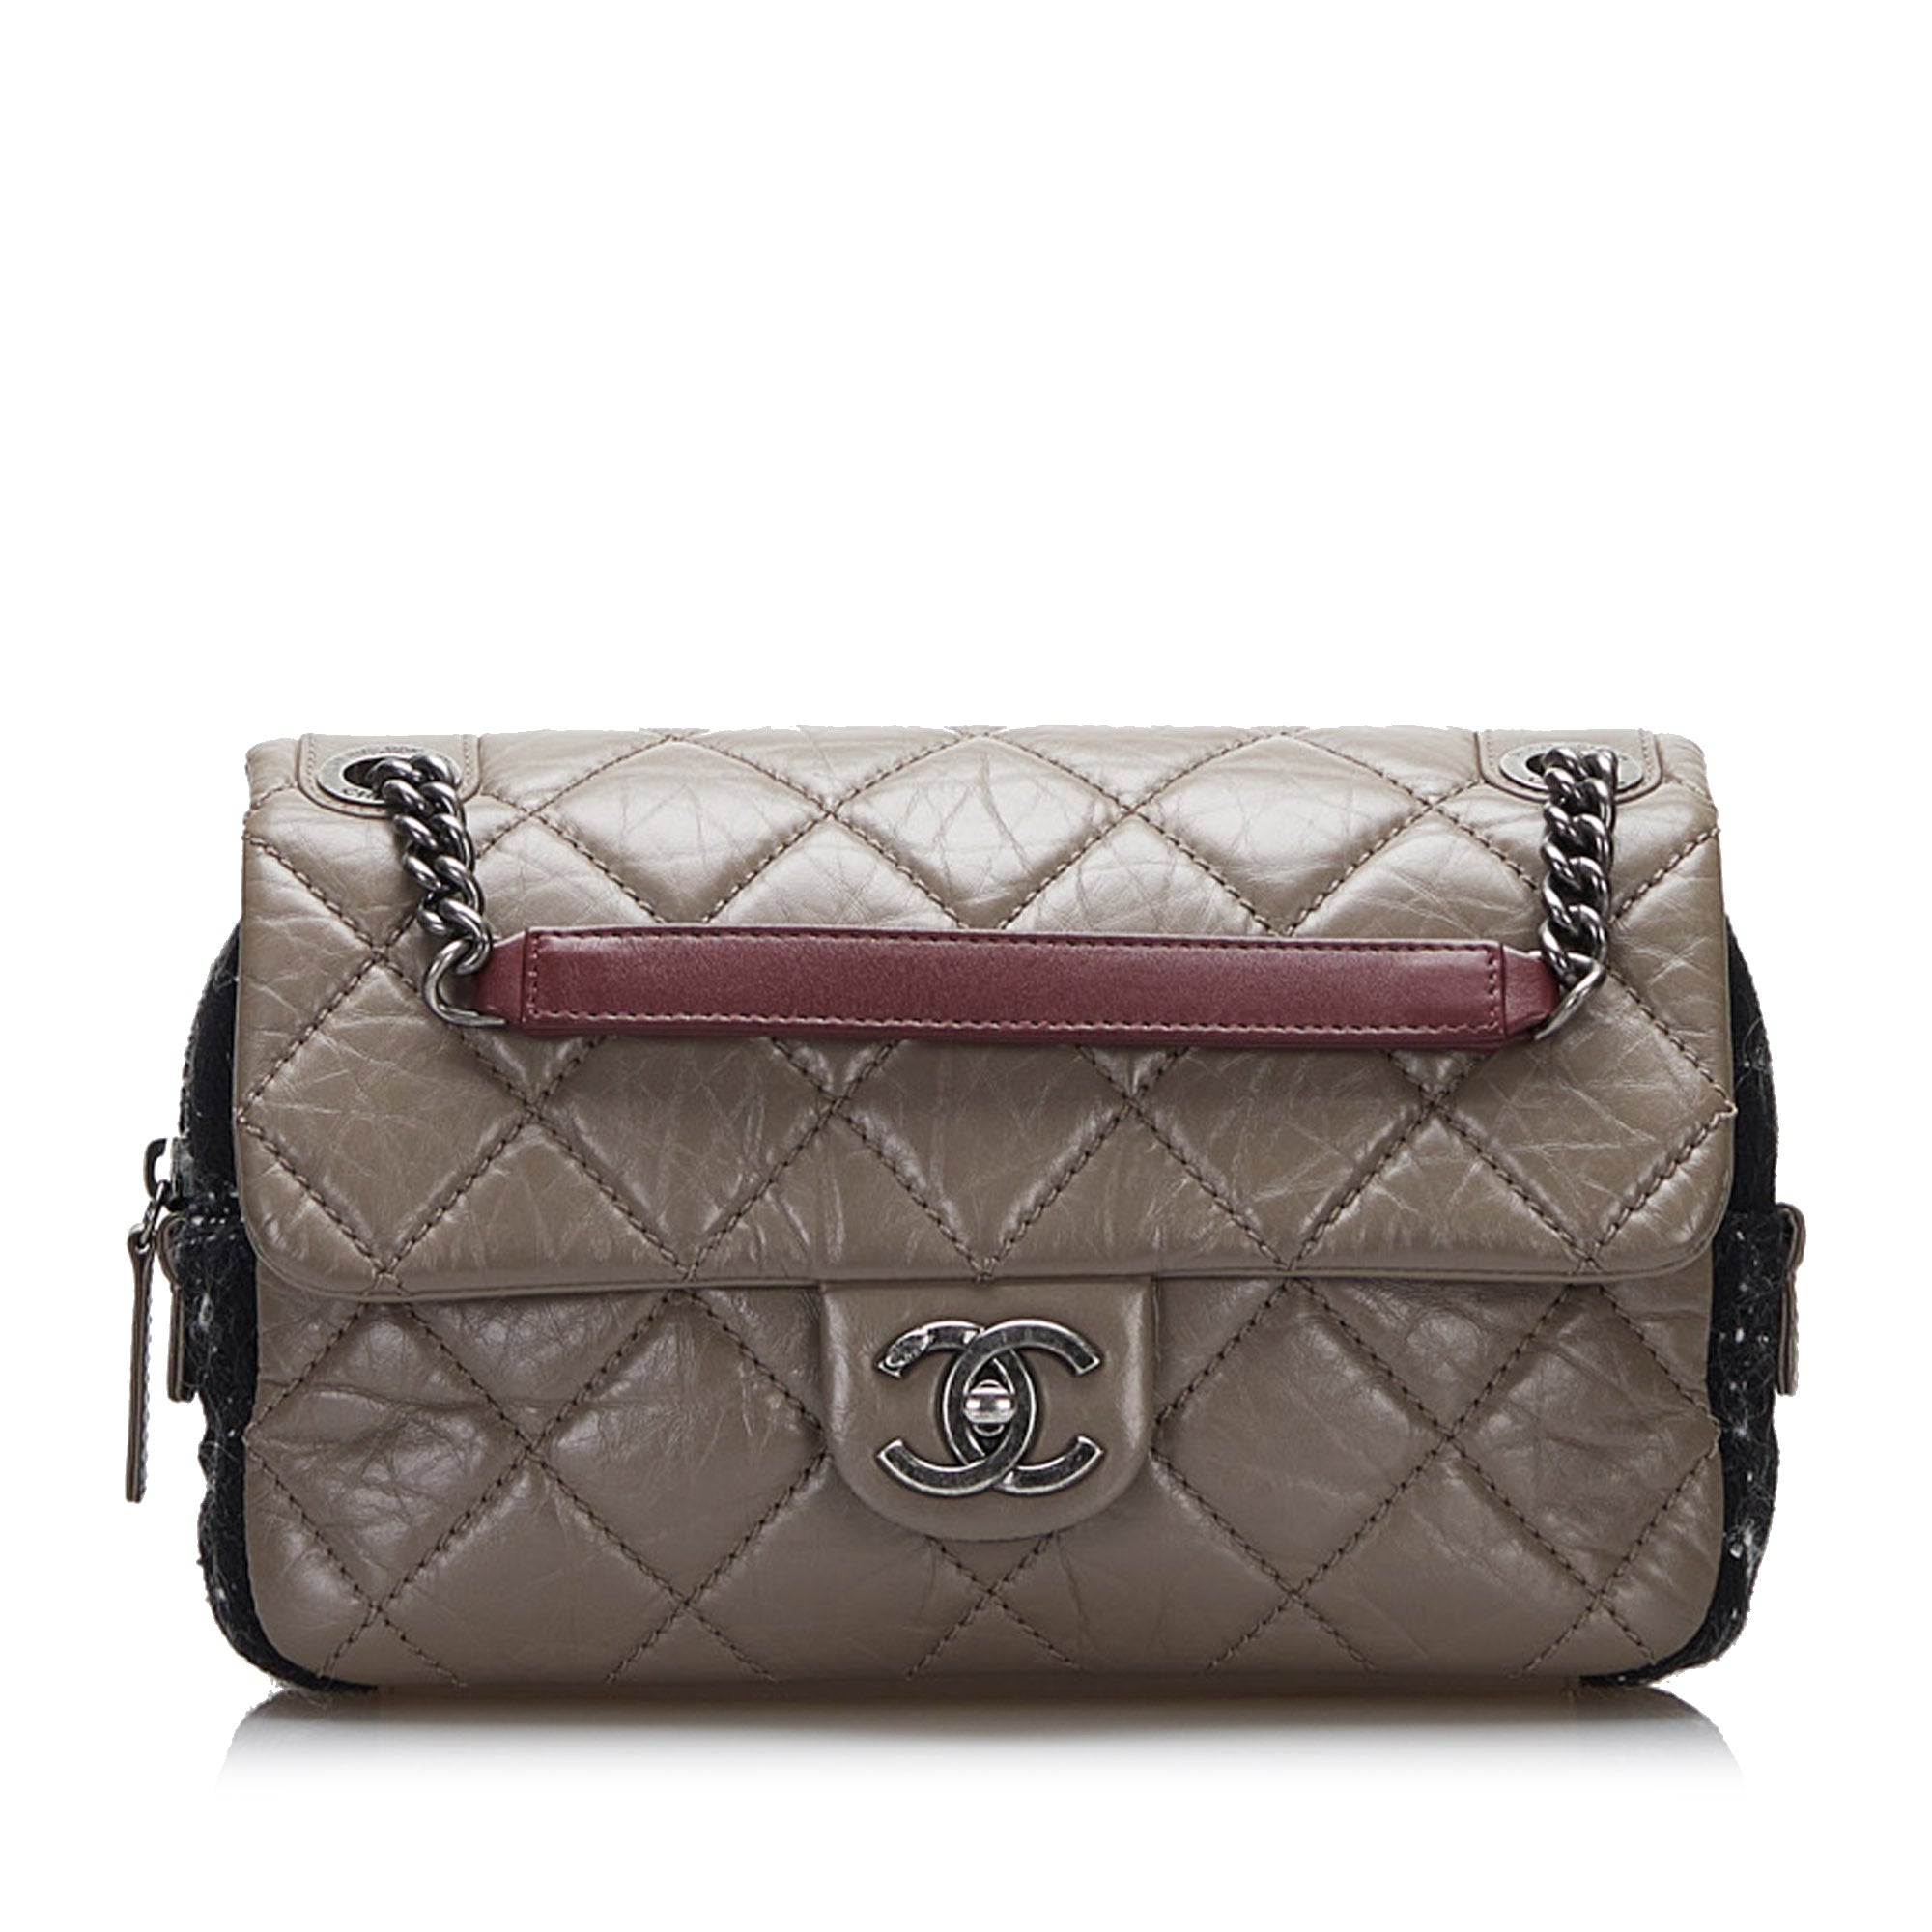 Chanel New Portobello Tote - Black Shoulder Bags, Handbags